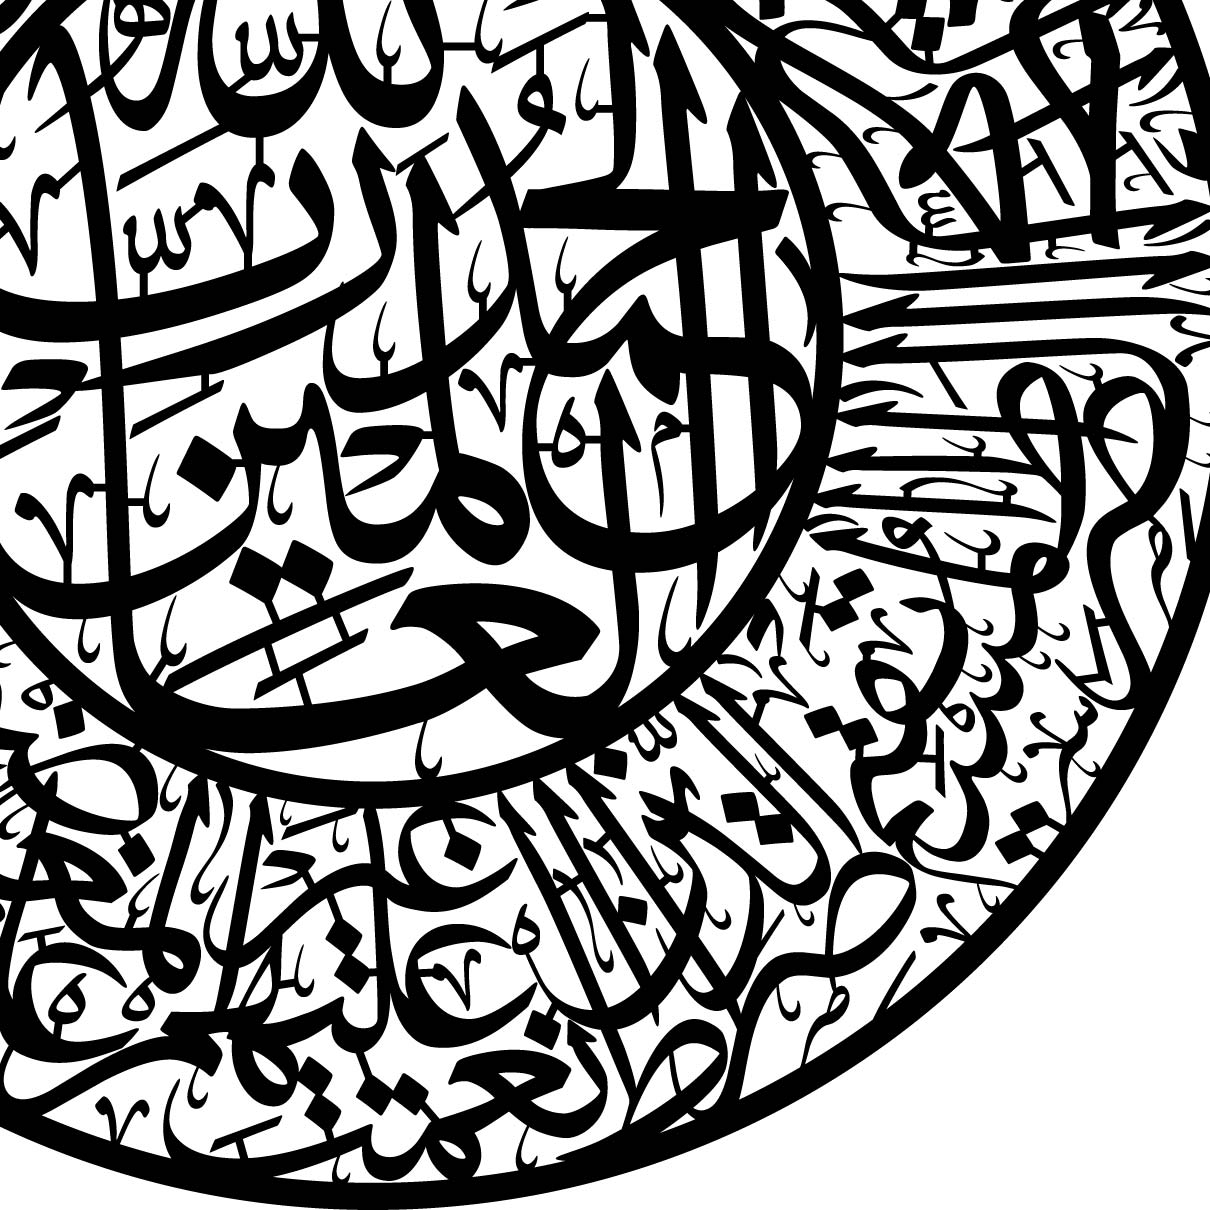 SURAH AL FATIHA Arabic Calligraphy in Thuluth Script - islamicwalldecors